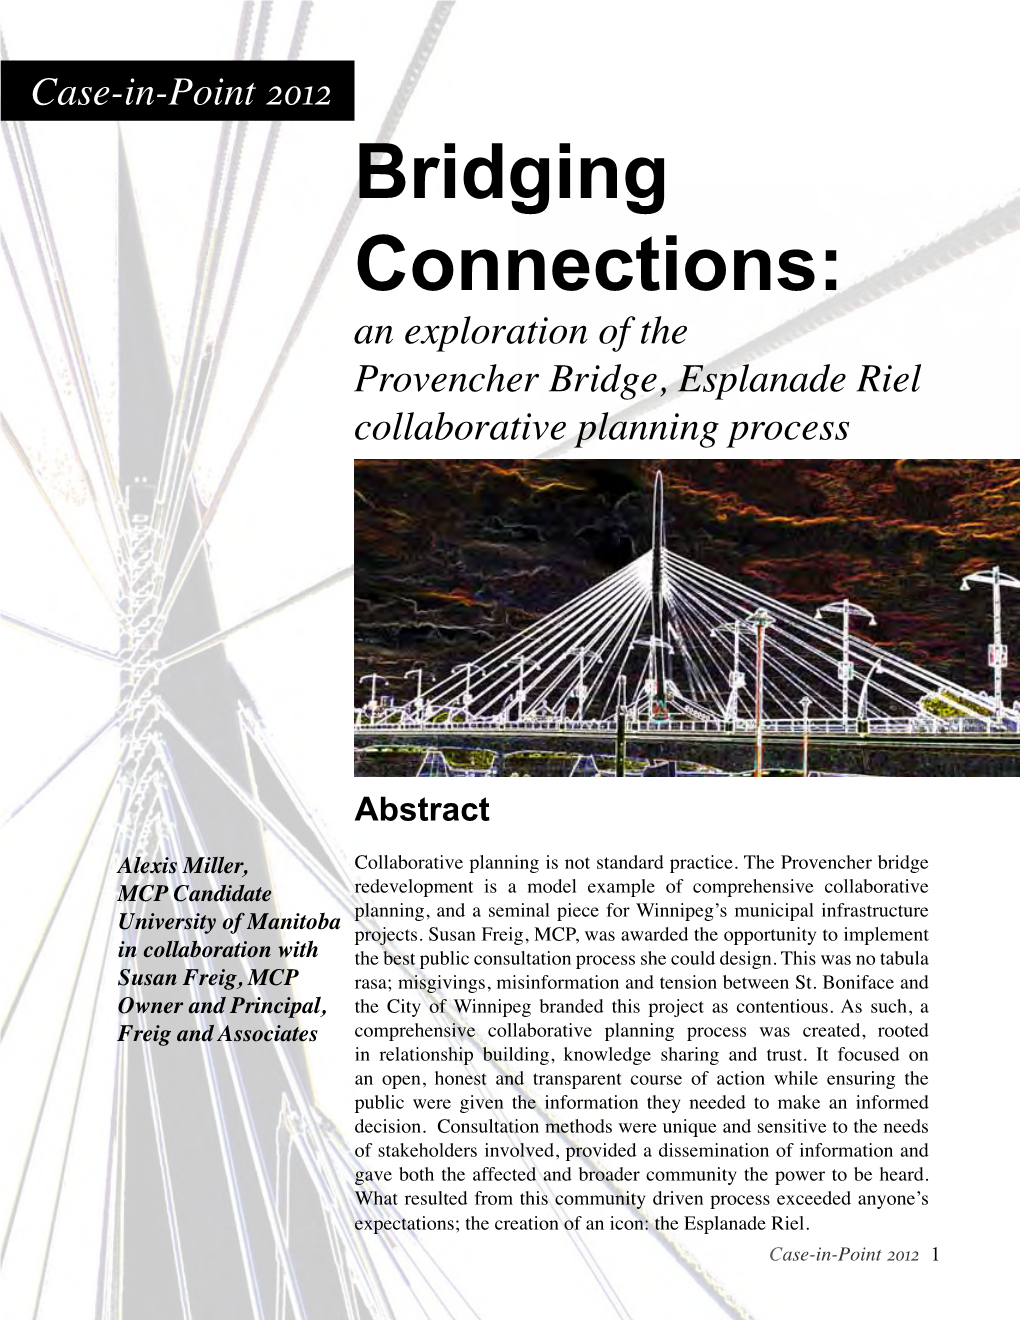 An Exploration of the Provencher Bridge, Esplanade Riel Collaborative Planning Process